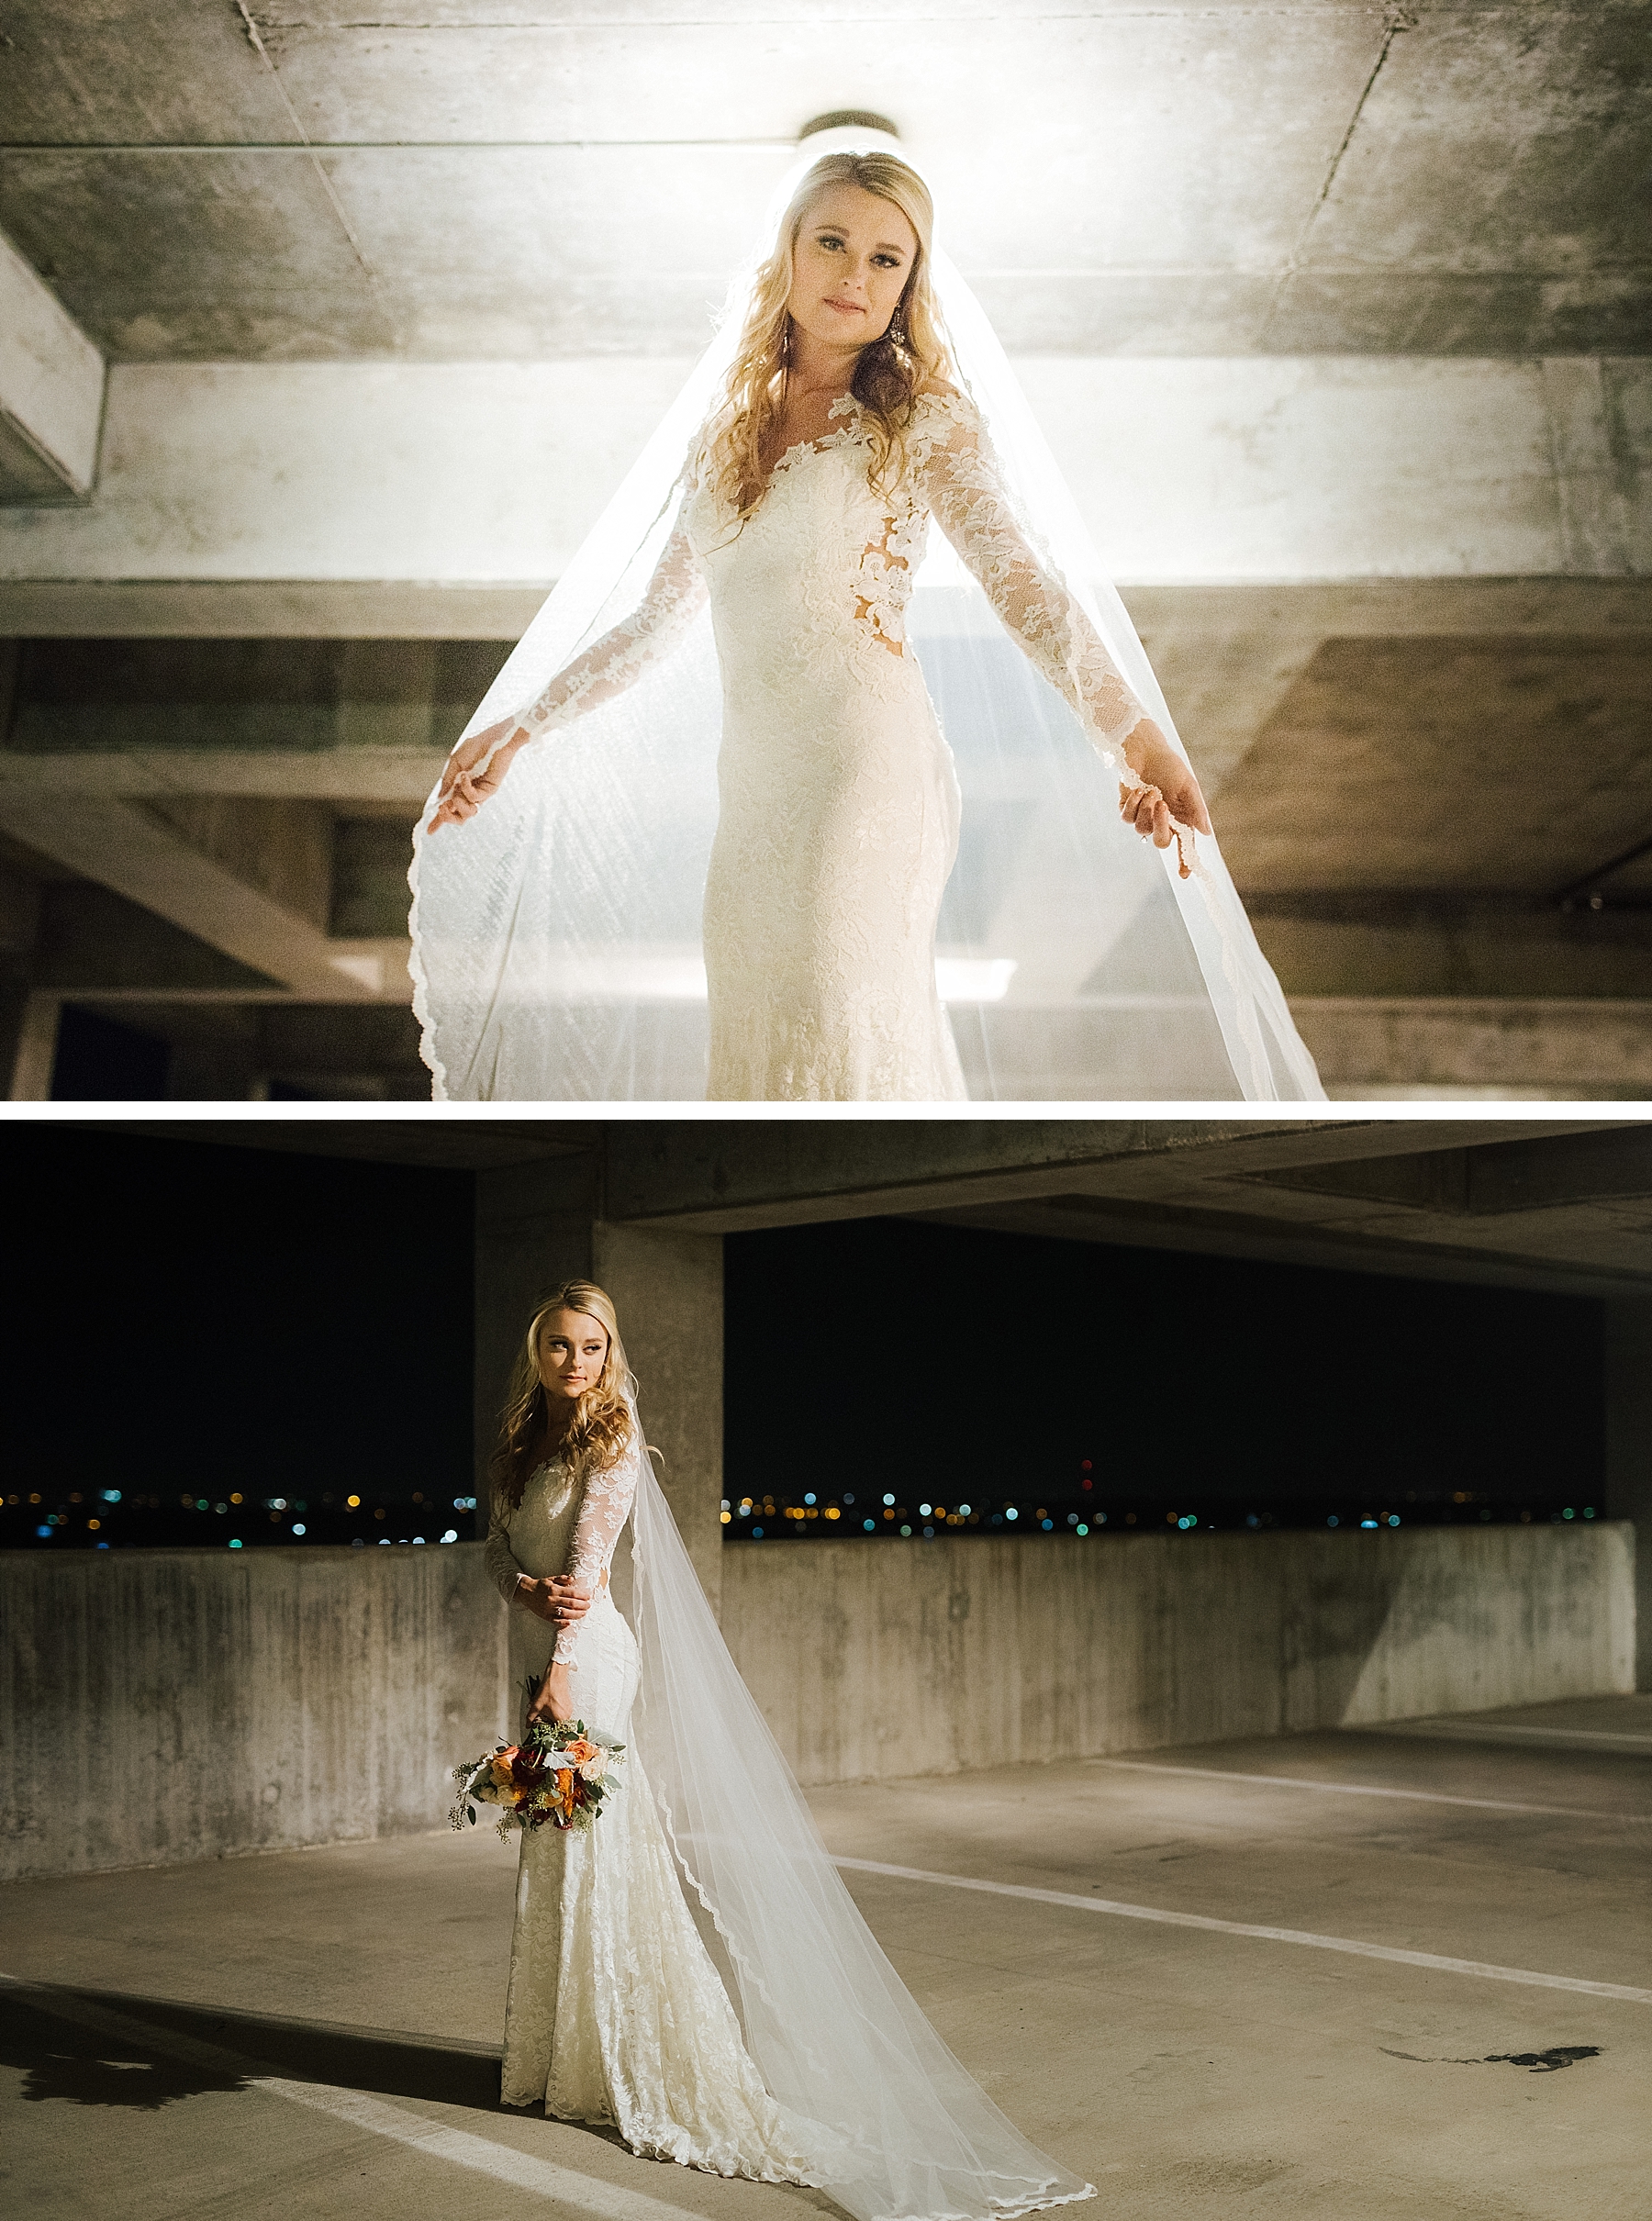 Nighttime Bridal Portraits by texas Wedding Photographer Jeff Brummett Visuals